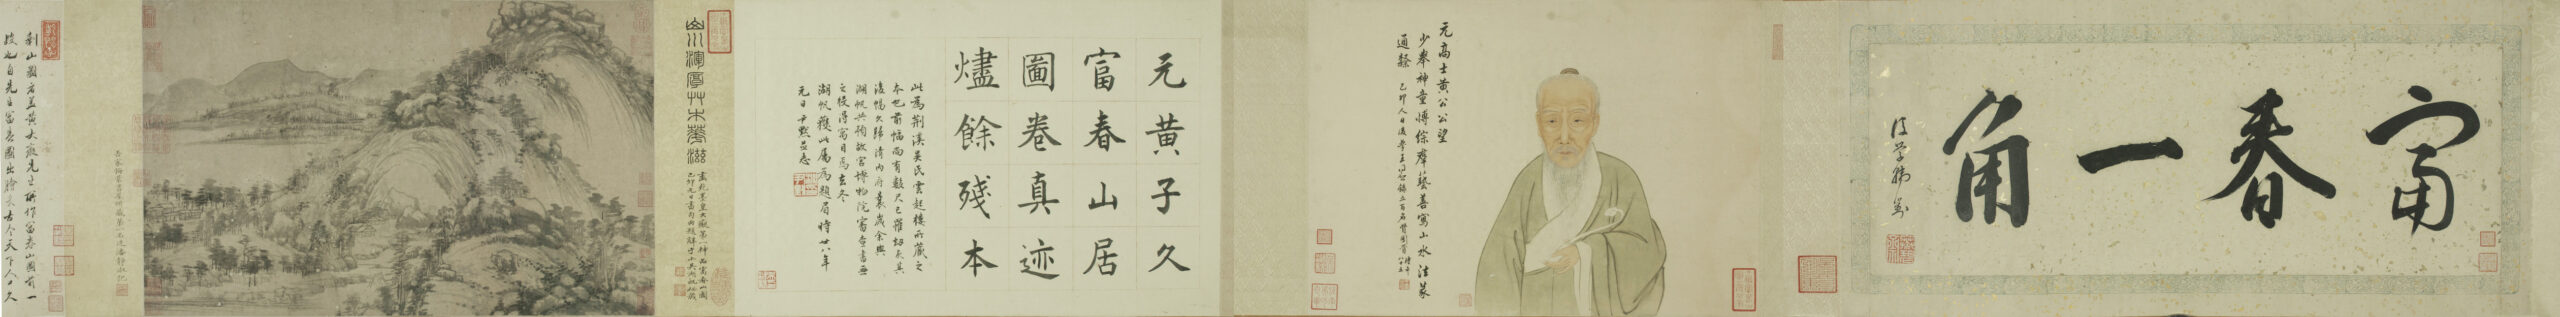 “The Remaining Mountain” (first part of the scroll), Huang Gongwang, Dwelling in the Fuchun Mountains, 1350, handscroll, ink on paper, 31.8 x 51.4 cm (Zhejiang Provincial Museum, Hangzhou)